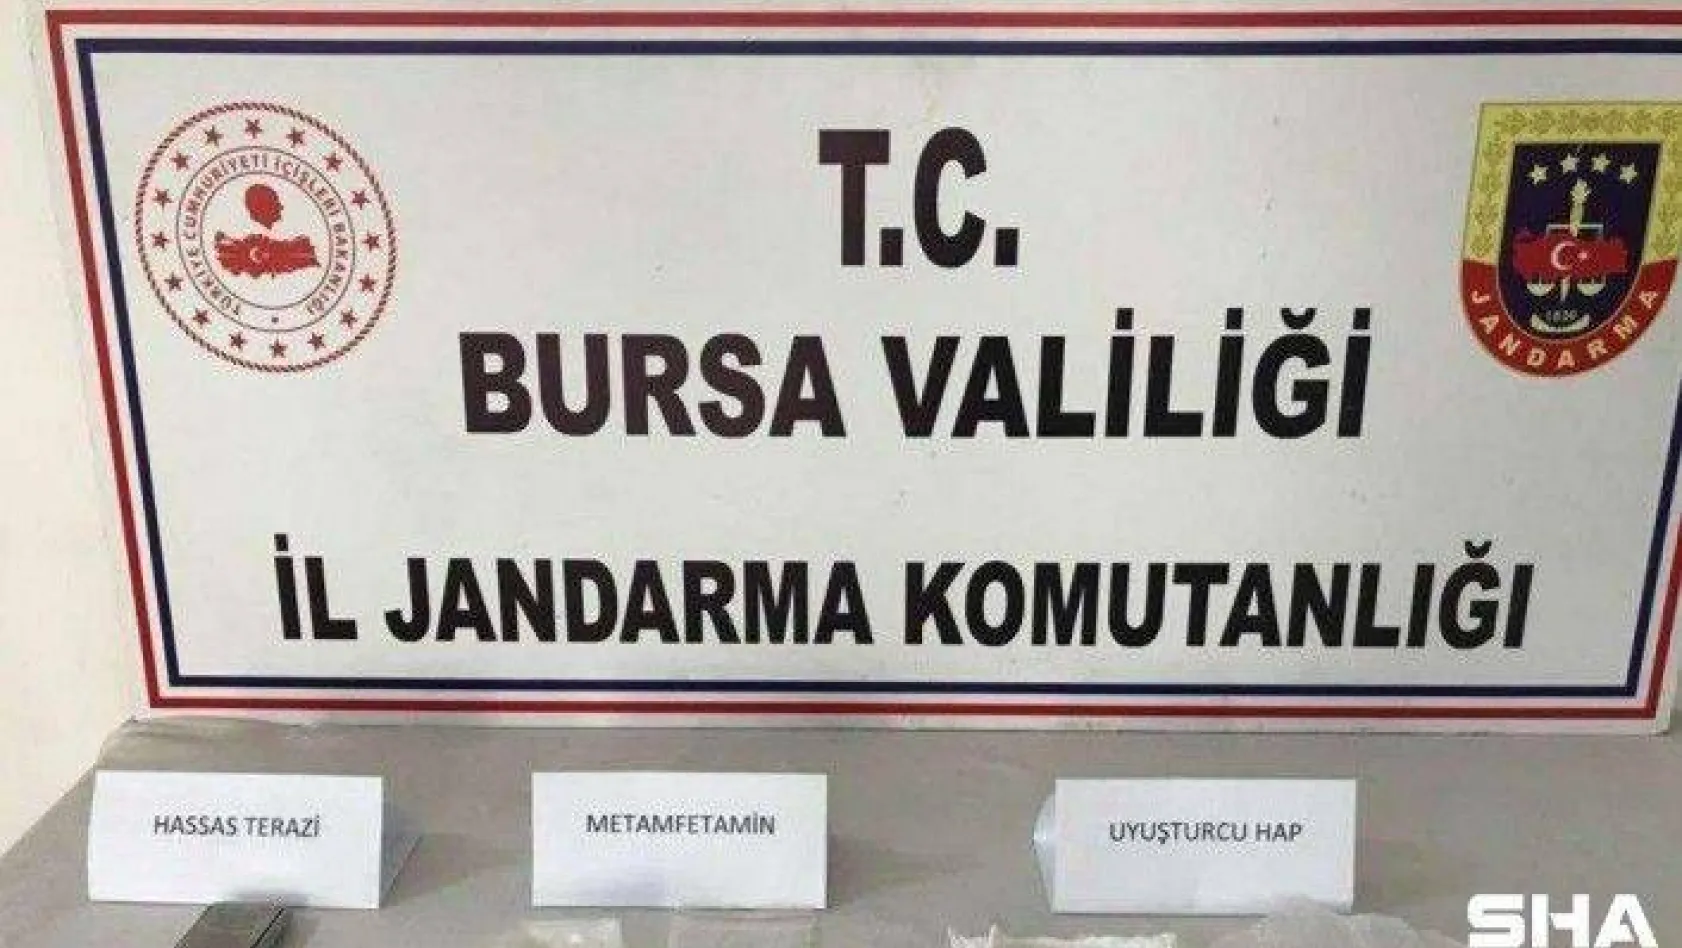 Bursa'da jandarmadan uyuşturucu tacirlerine operasyon: 2 tutuklama